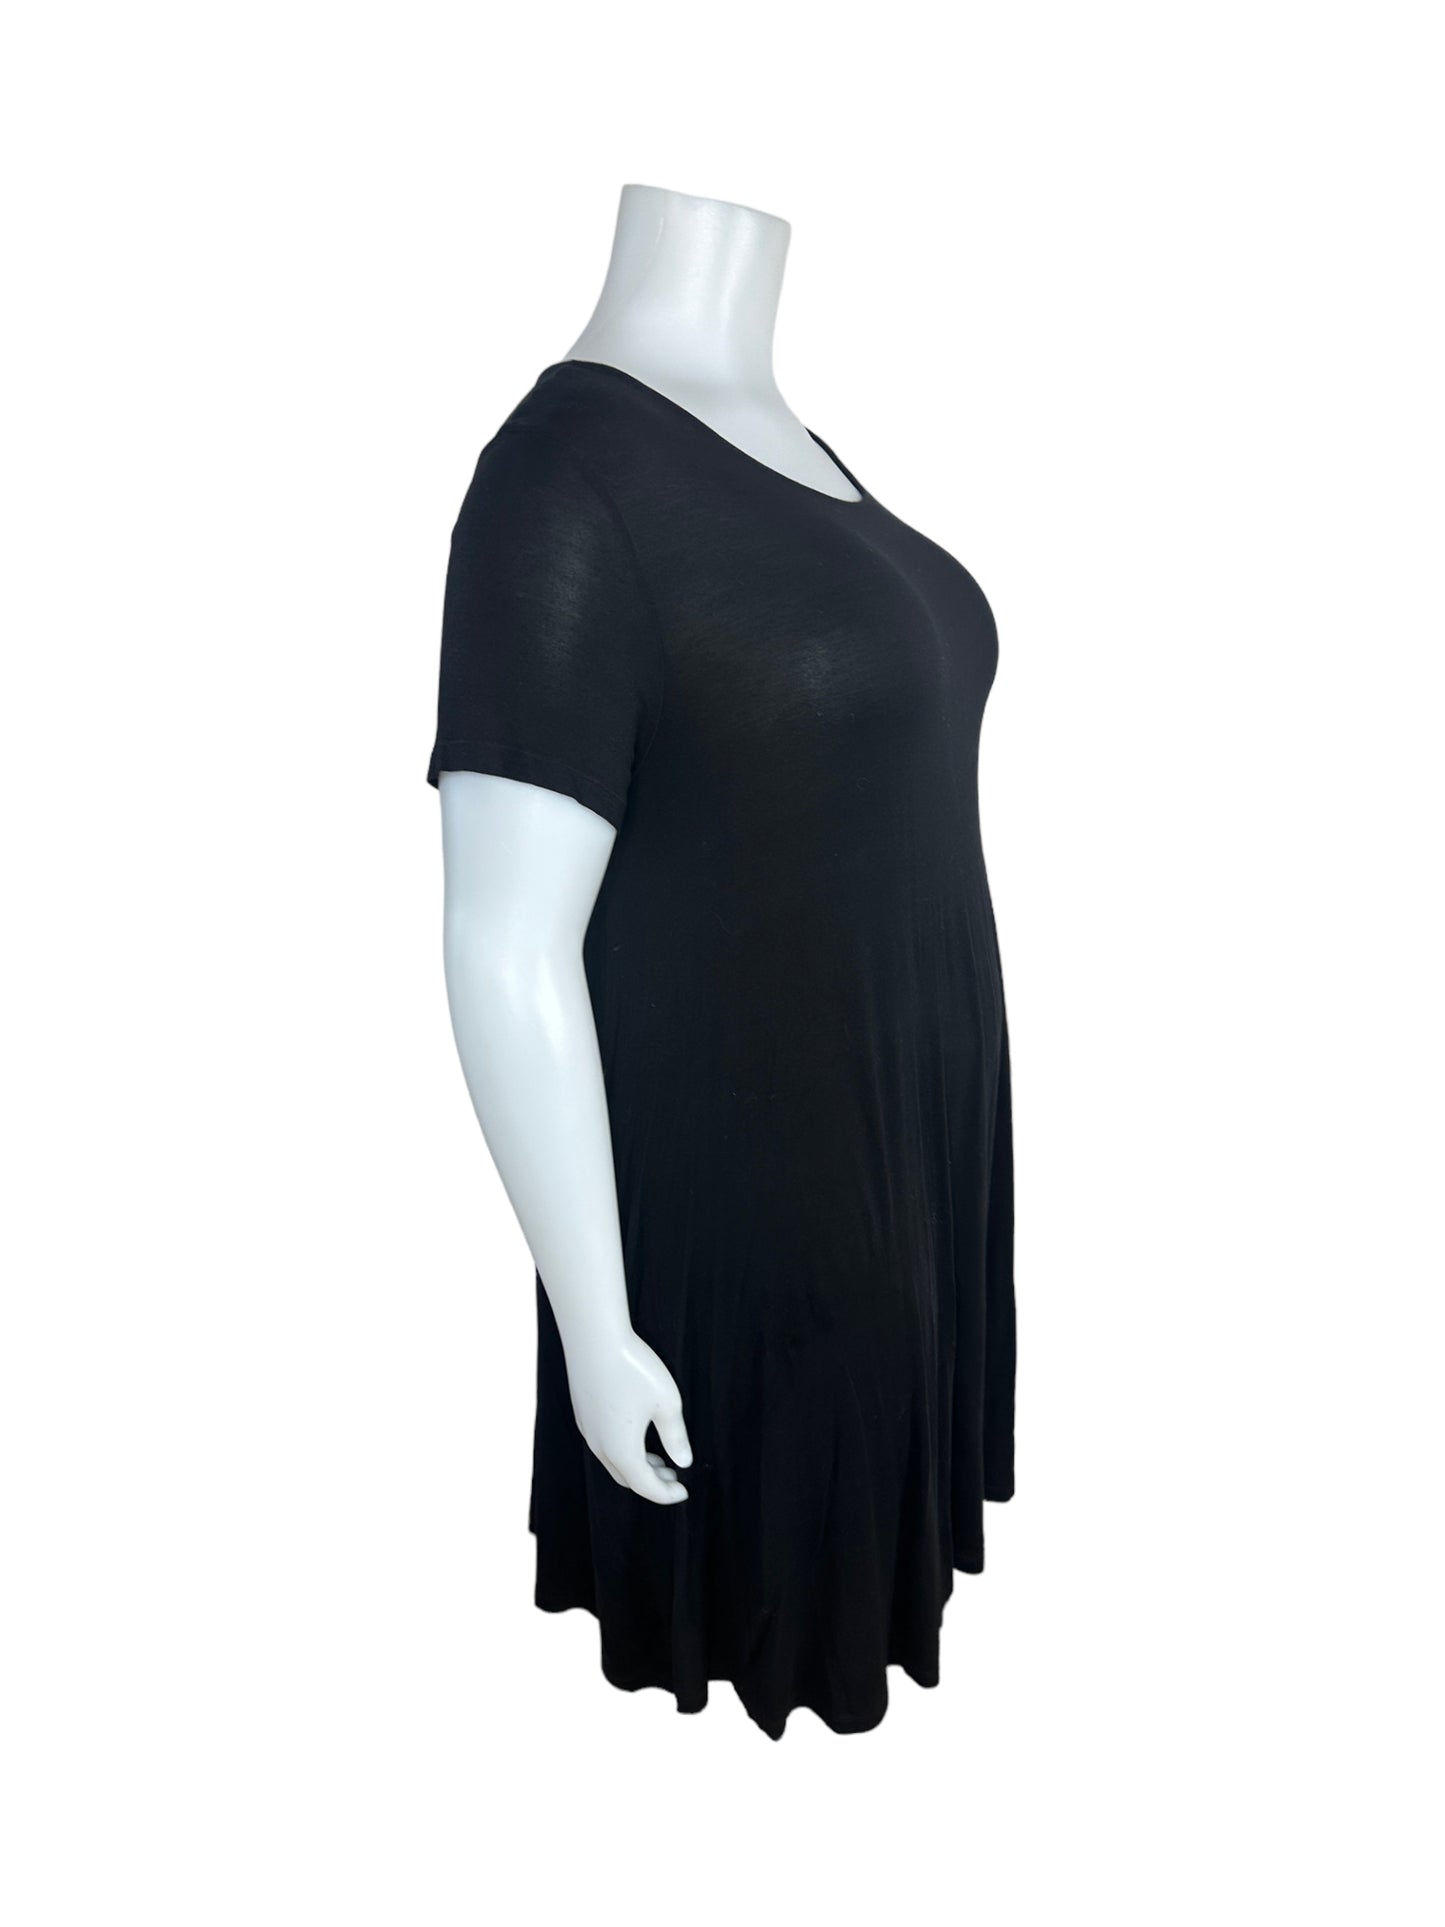 “Fashion Nova” Black Bodycon T-Shirt Dress (1X)